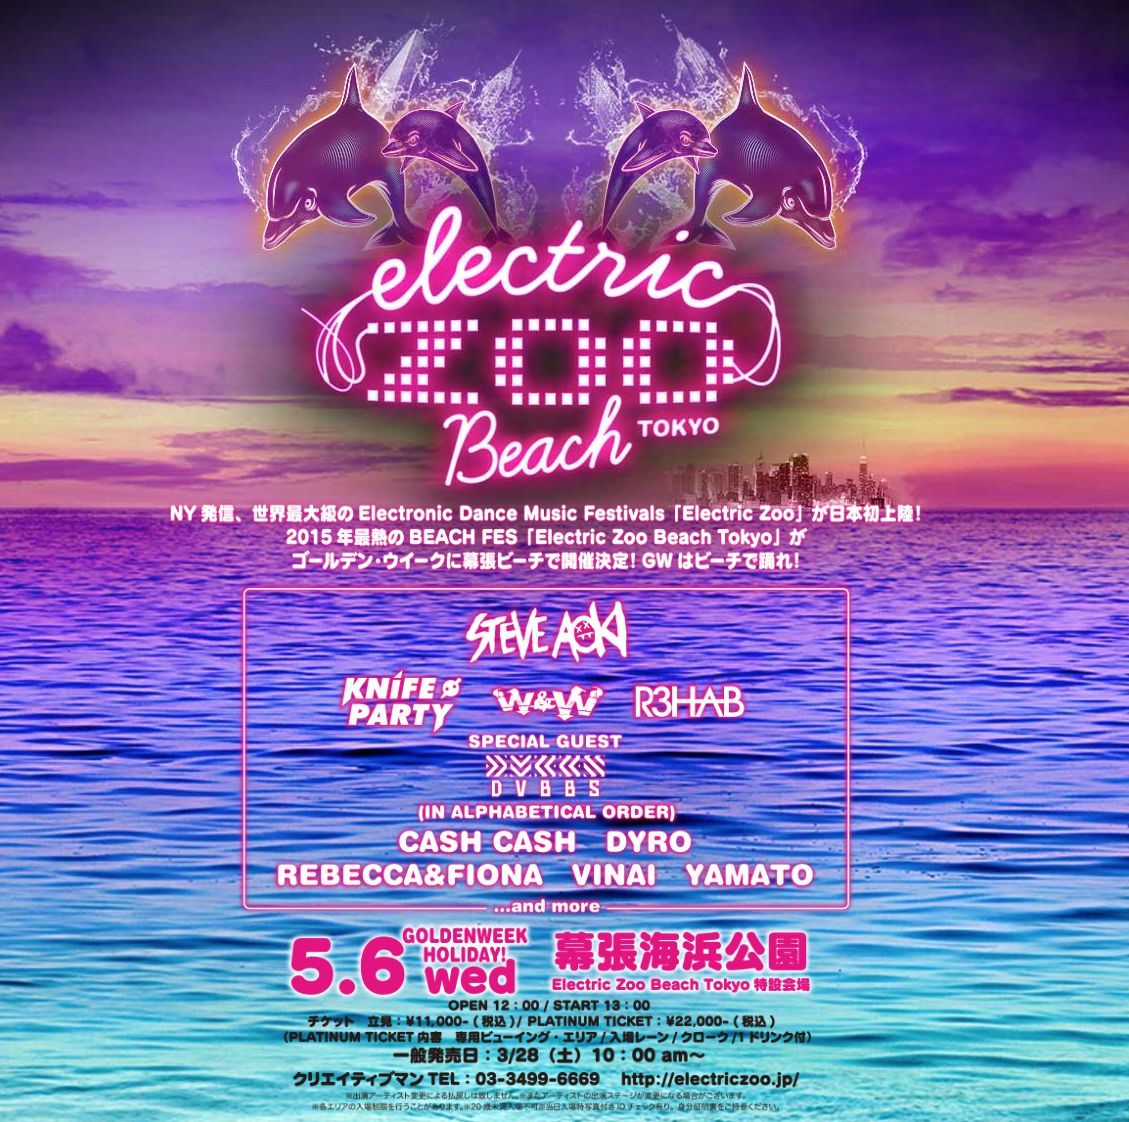 「Electric Zoo Beach」＆「electrox Beach Osaka」の第3弾ラインナップにDVBBSが発表